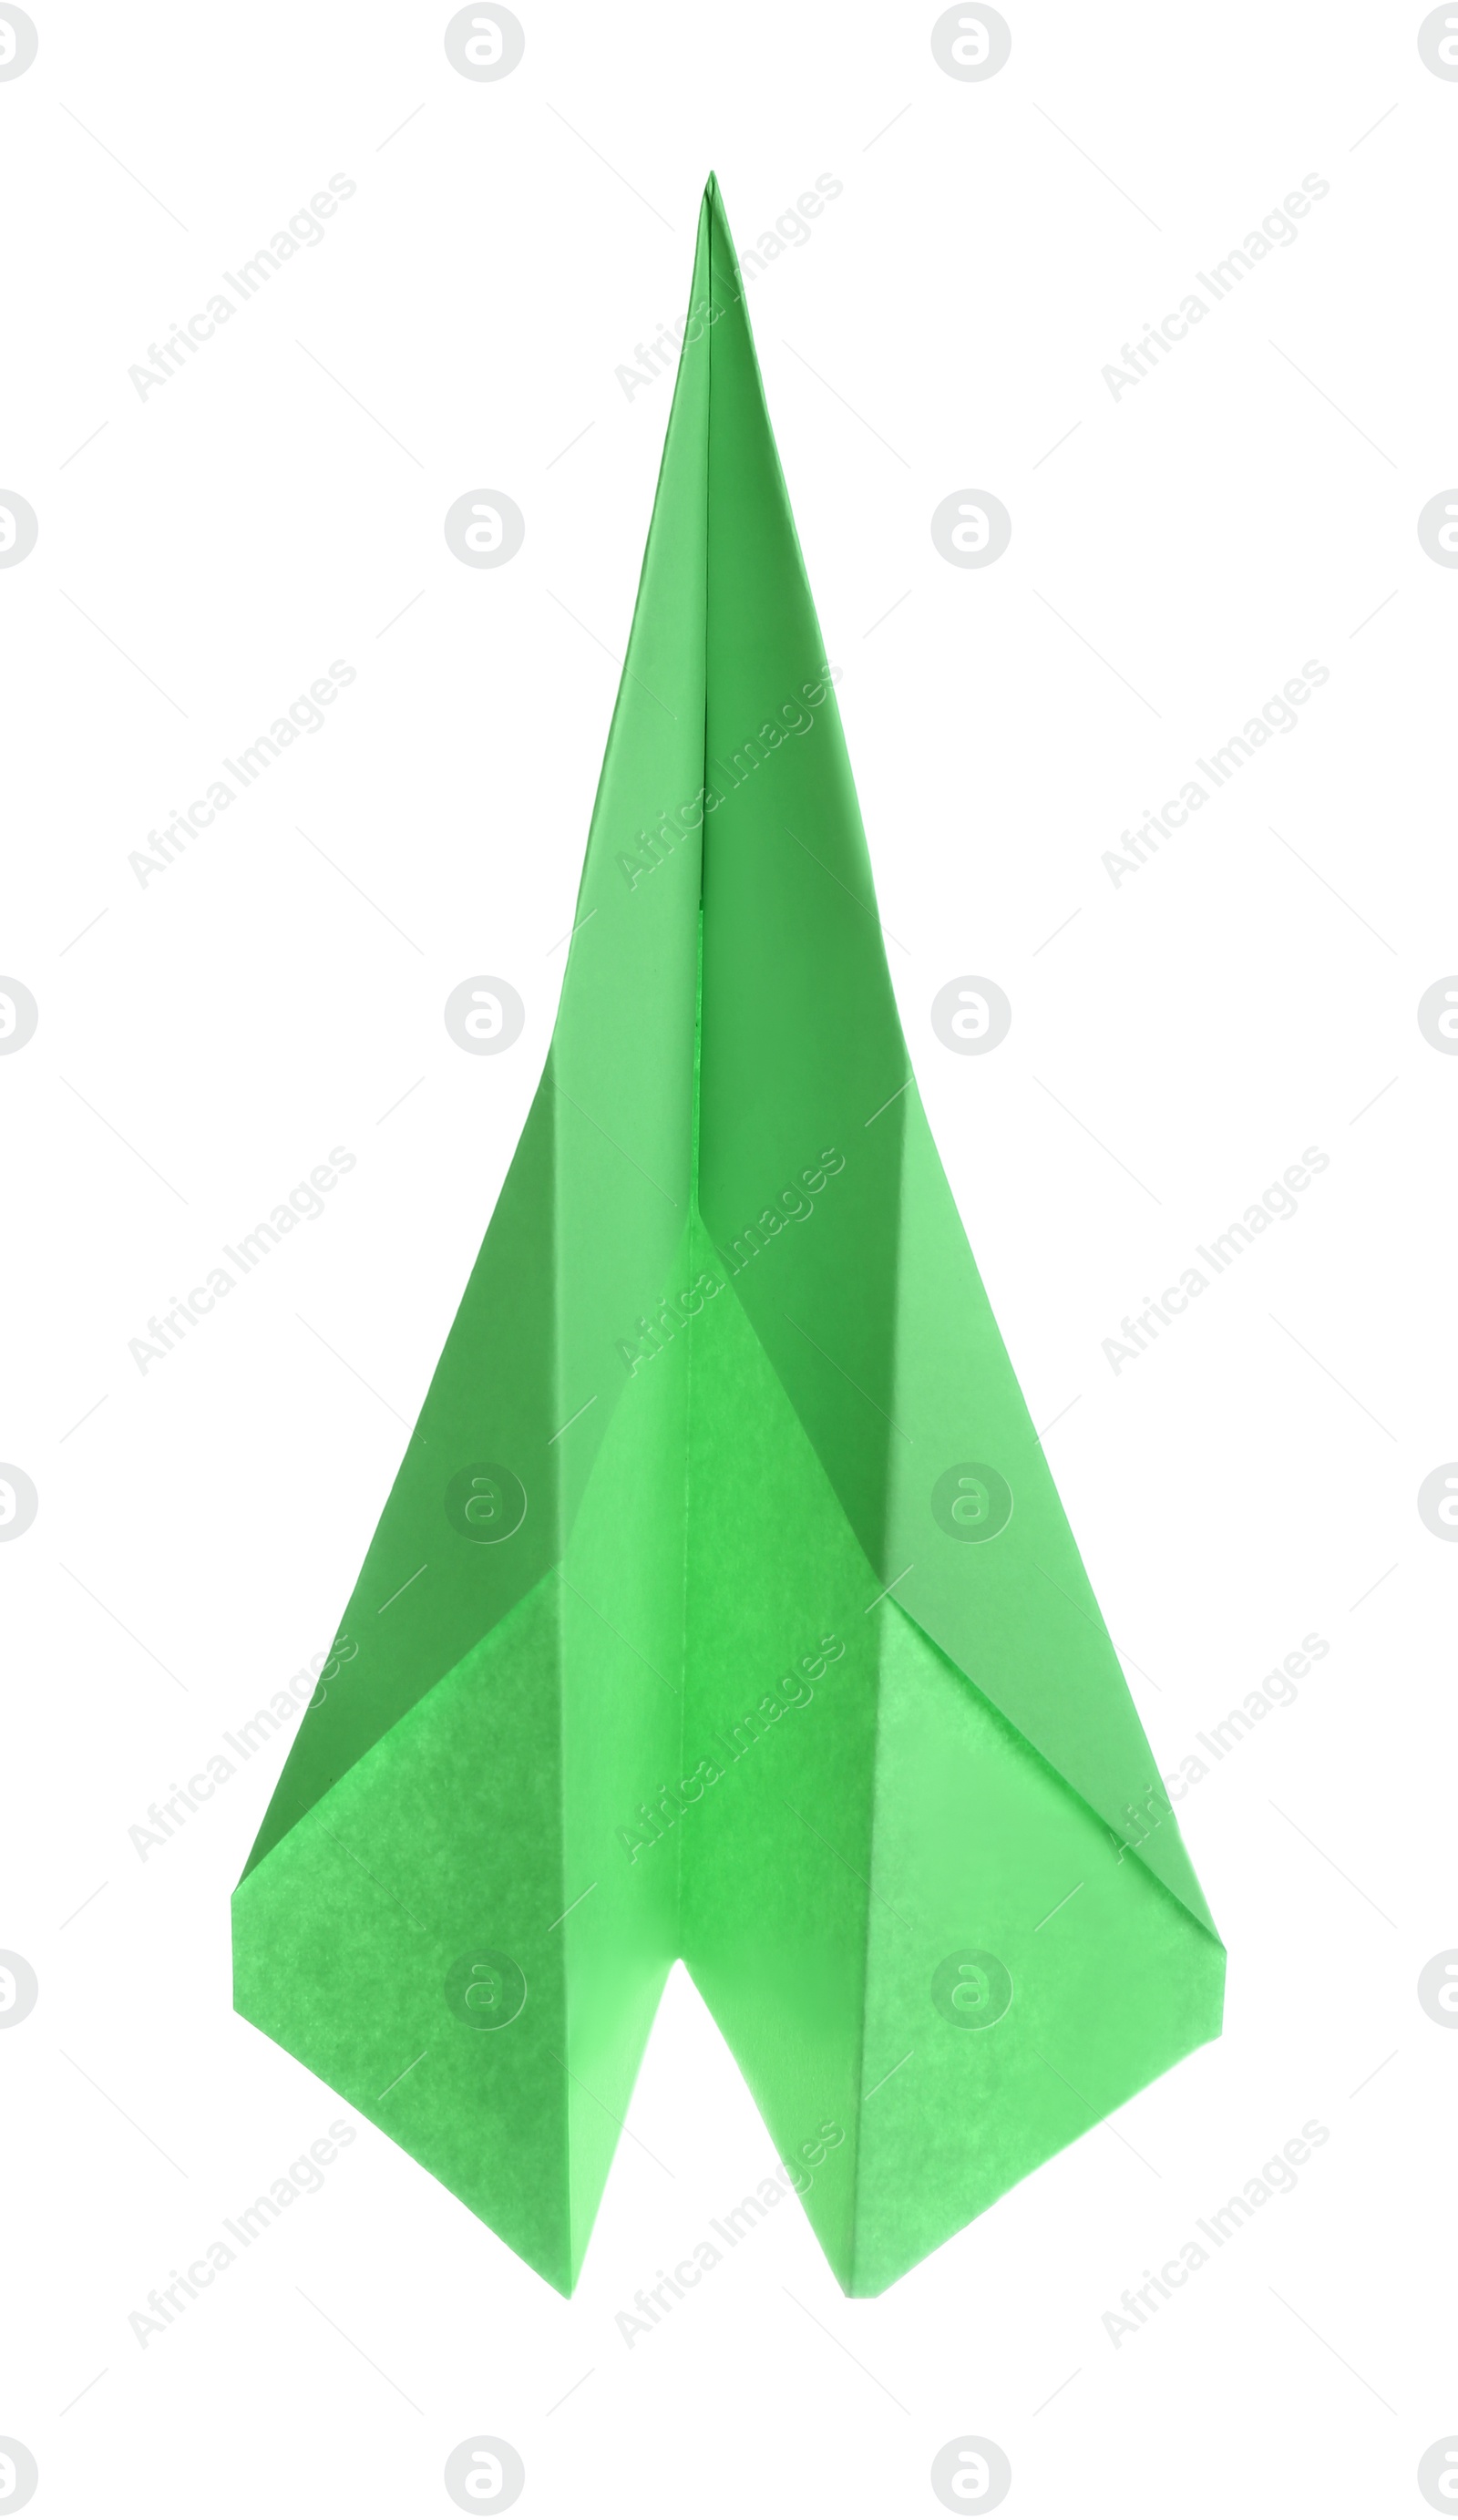 Photo of Handmade light green paper plane isolated on white